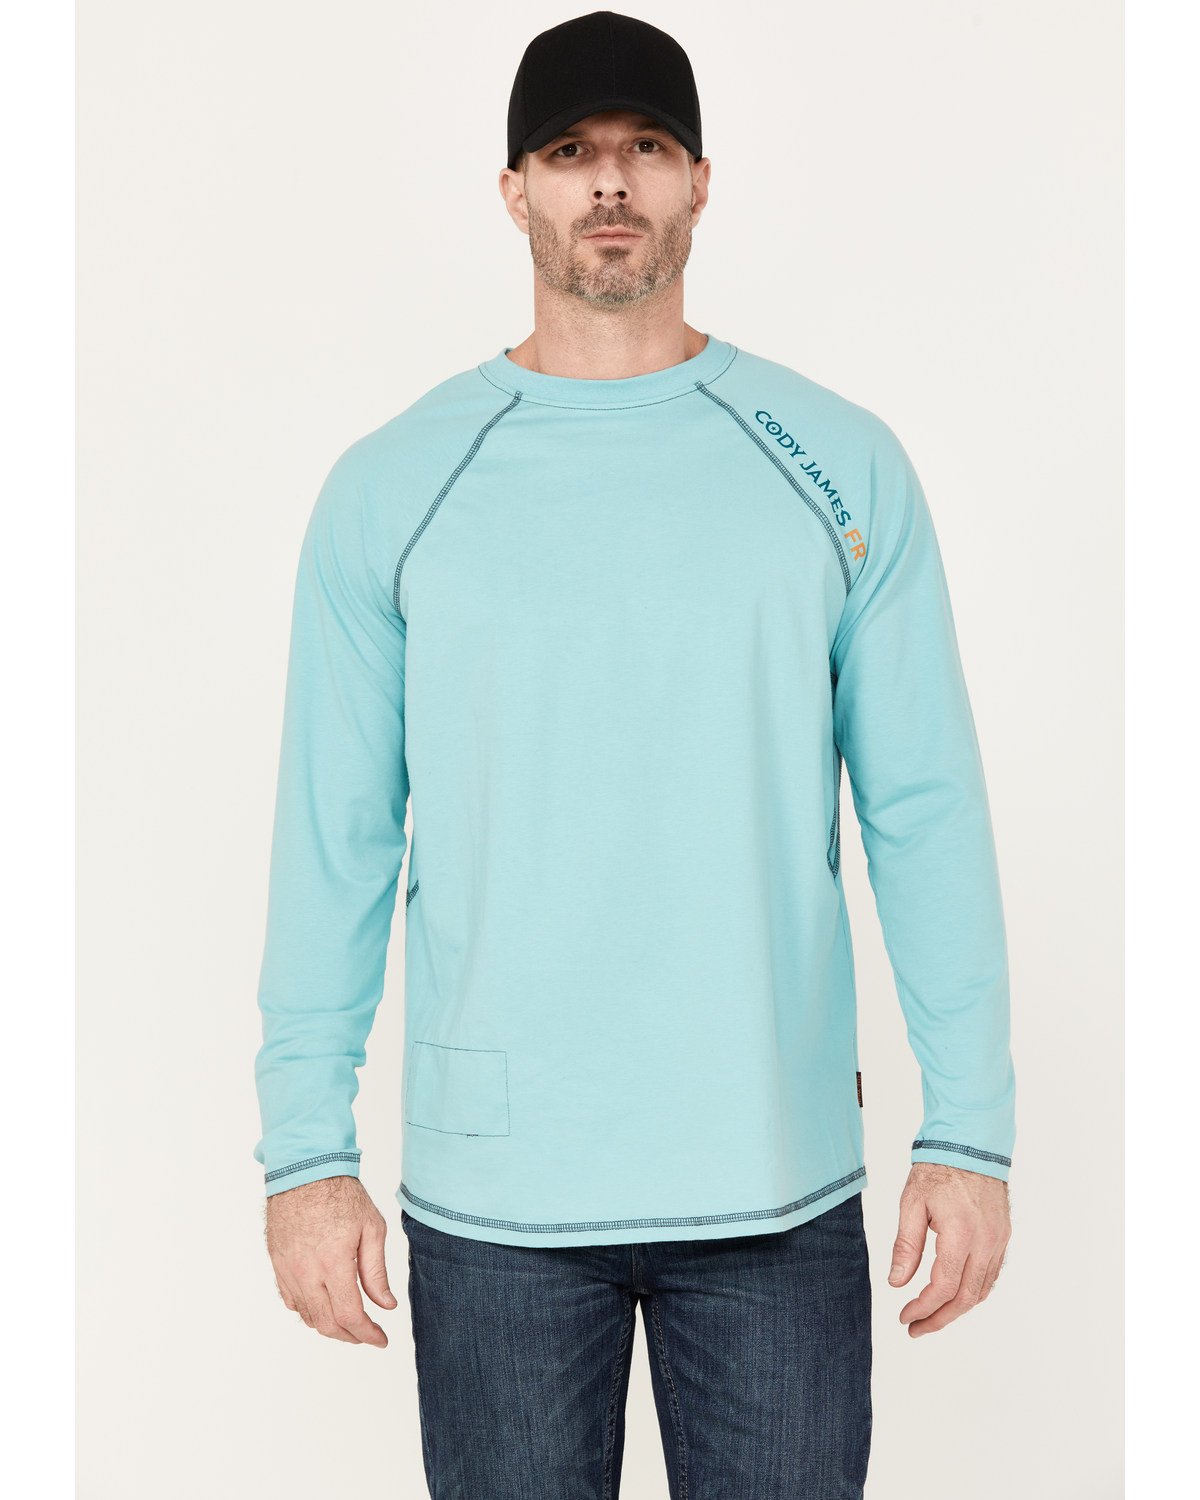 Cody James Men's FR Solid Long Sleeve Raglan Work T-Shirt